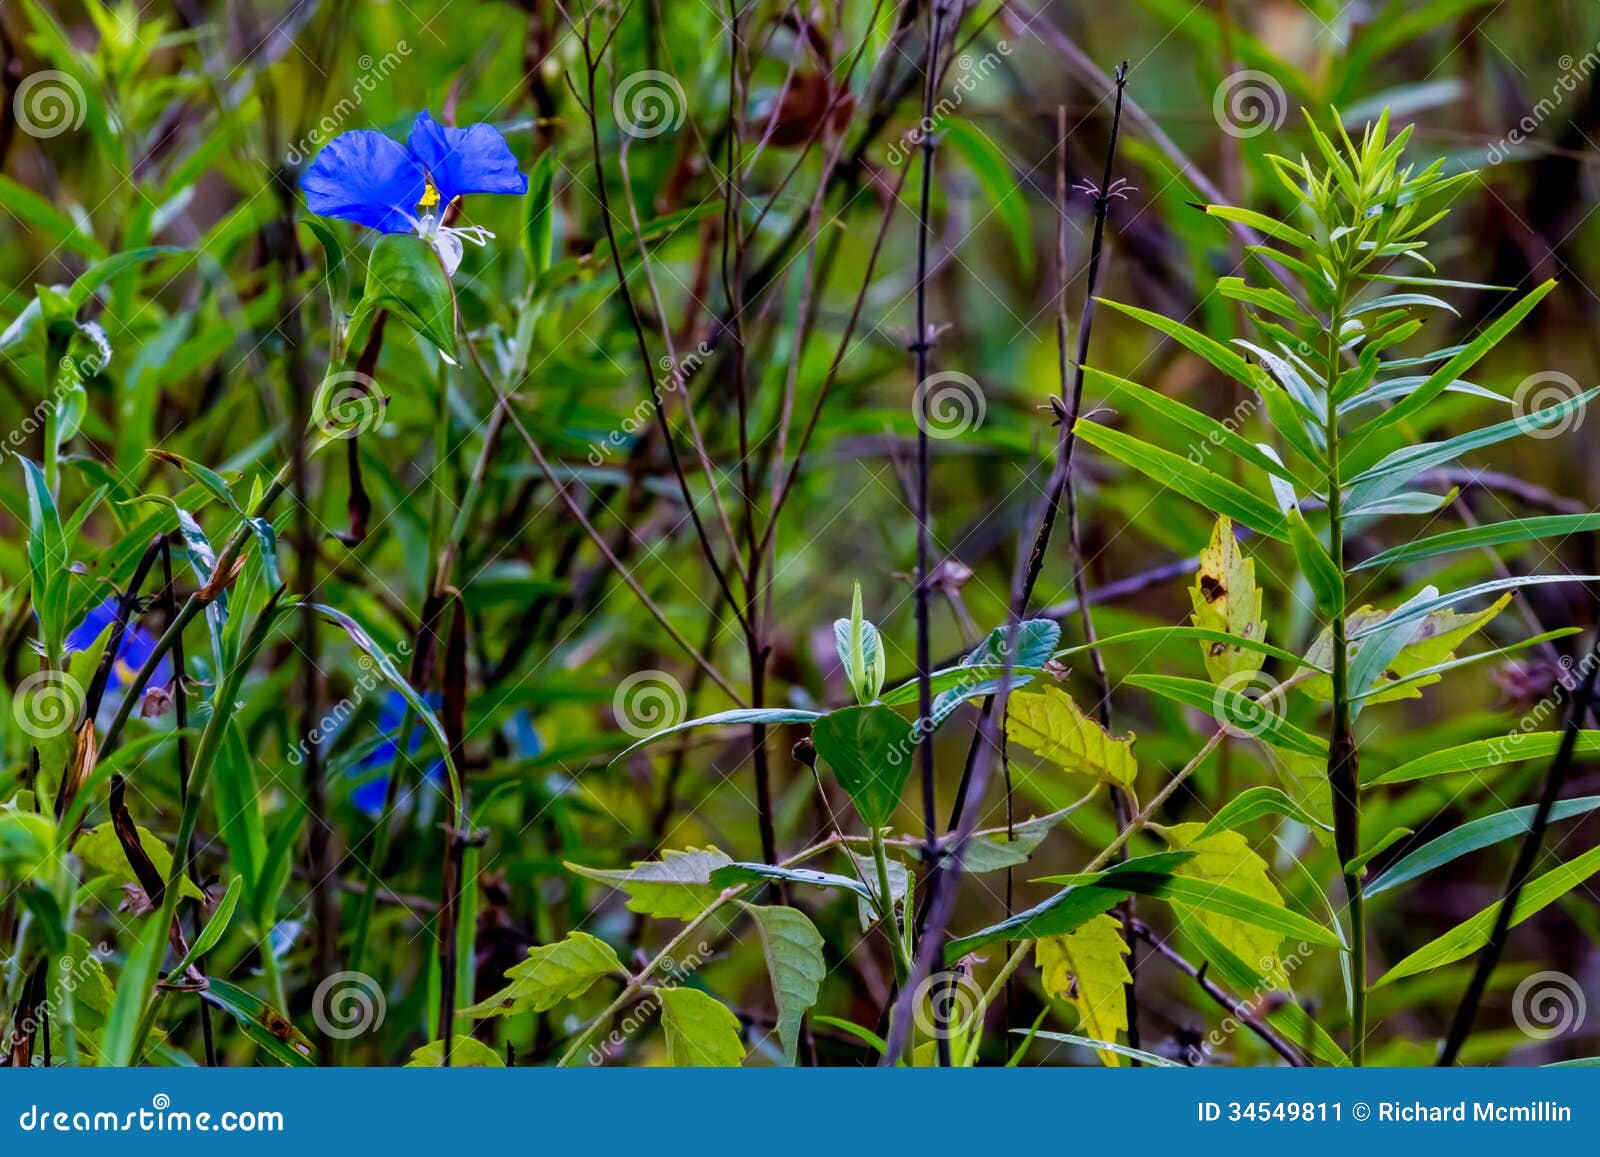 a beautiful blue erect dayflower